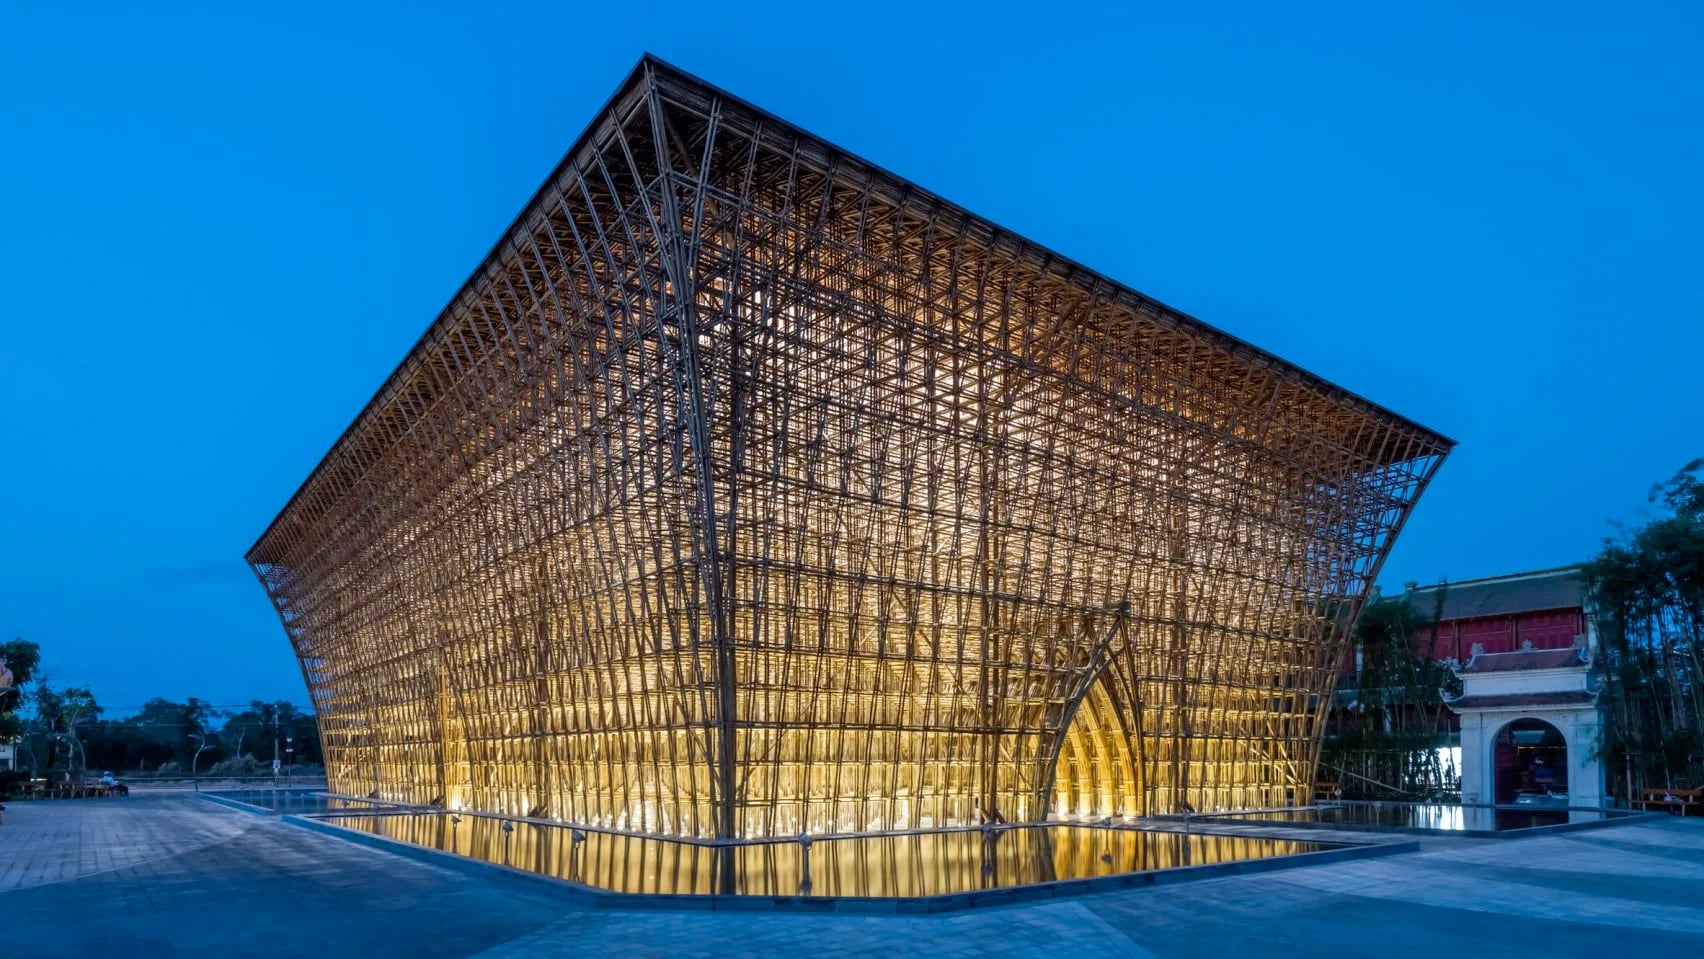 construccion en bambu sarquitectura verde vietnsam